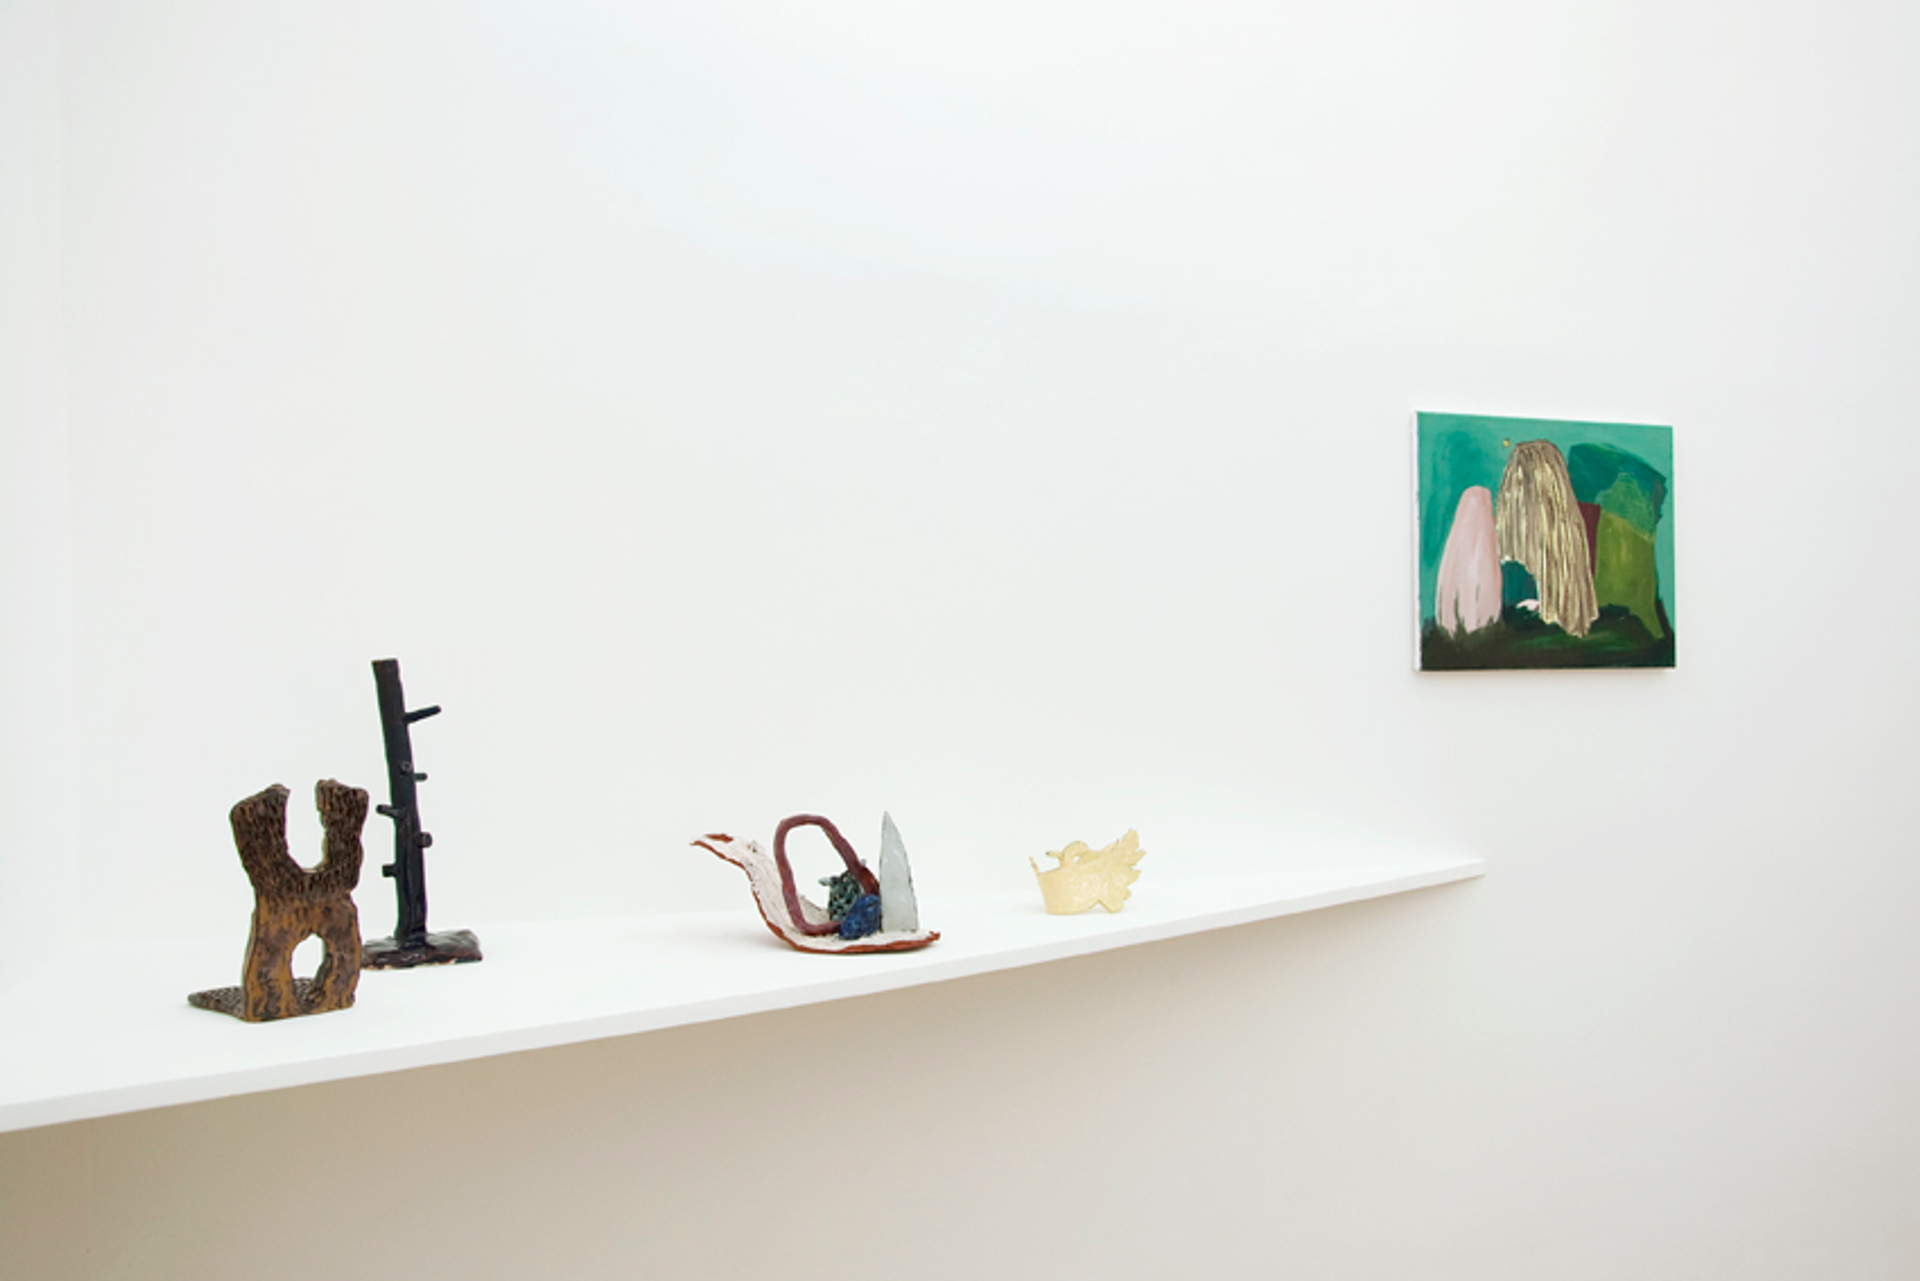 Installation view: Veronika Hilger, “Erdbewegungen HILGER”, 2015